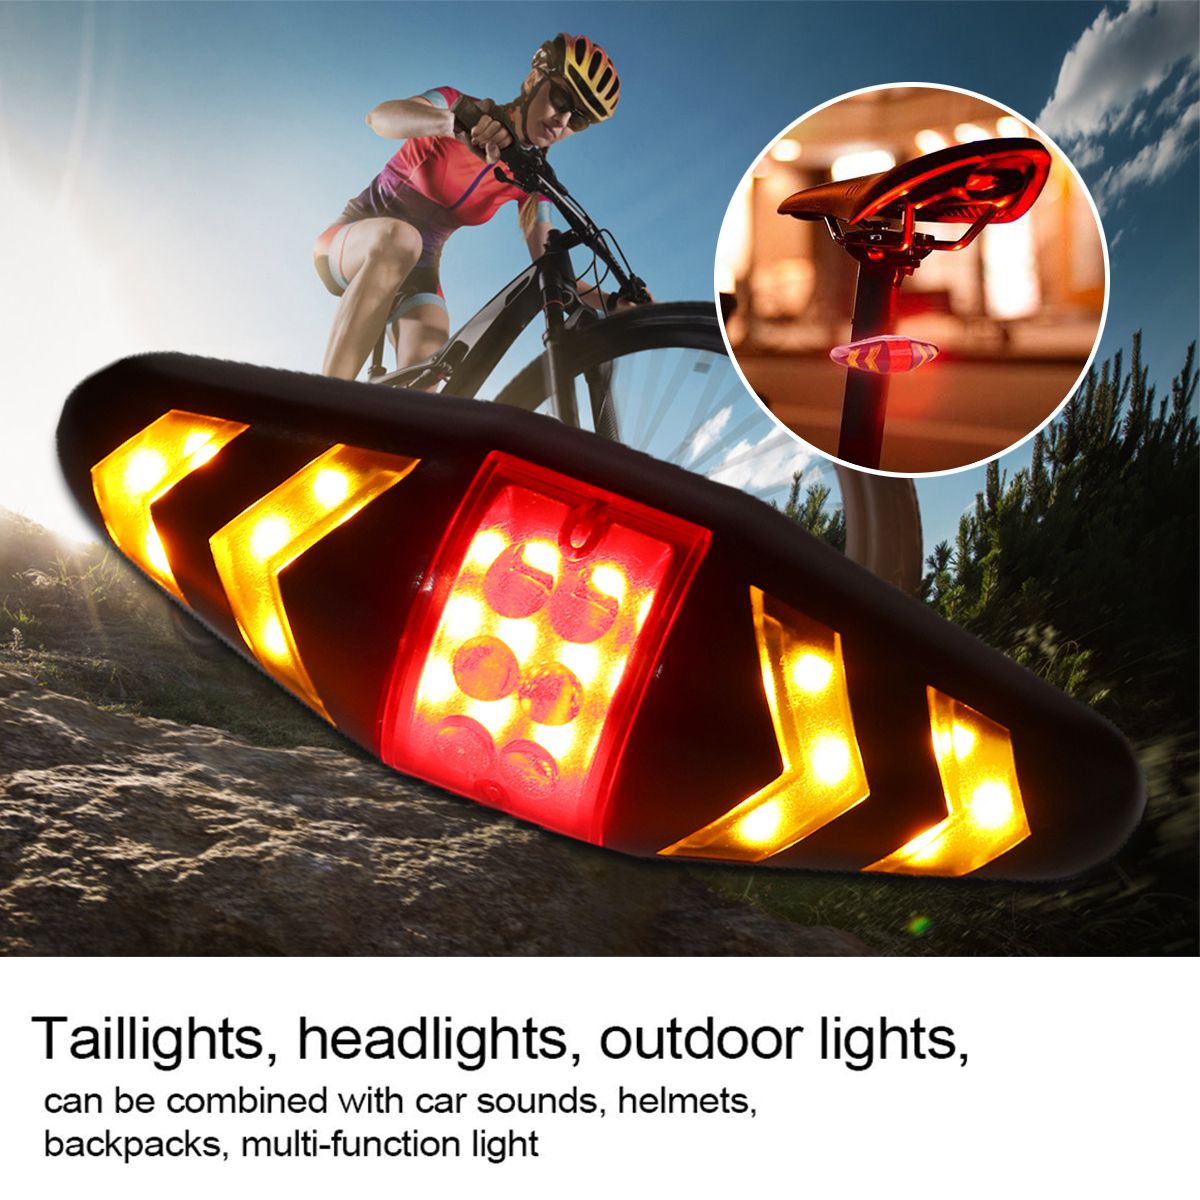 Wireless-Remote-Control-Bicycle-Turn-Signal-Lights-Bike-Tail-Flashing-Warning-Lamp-1577779